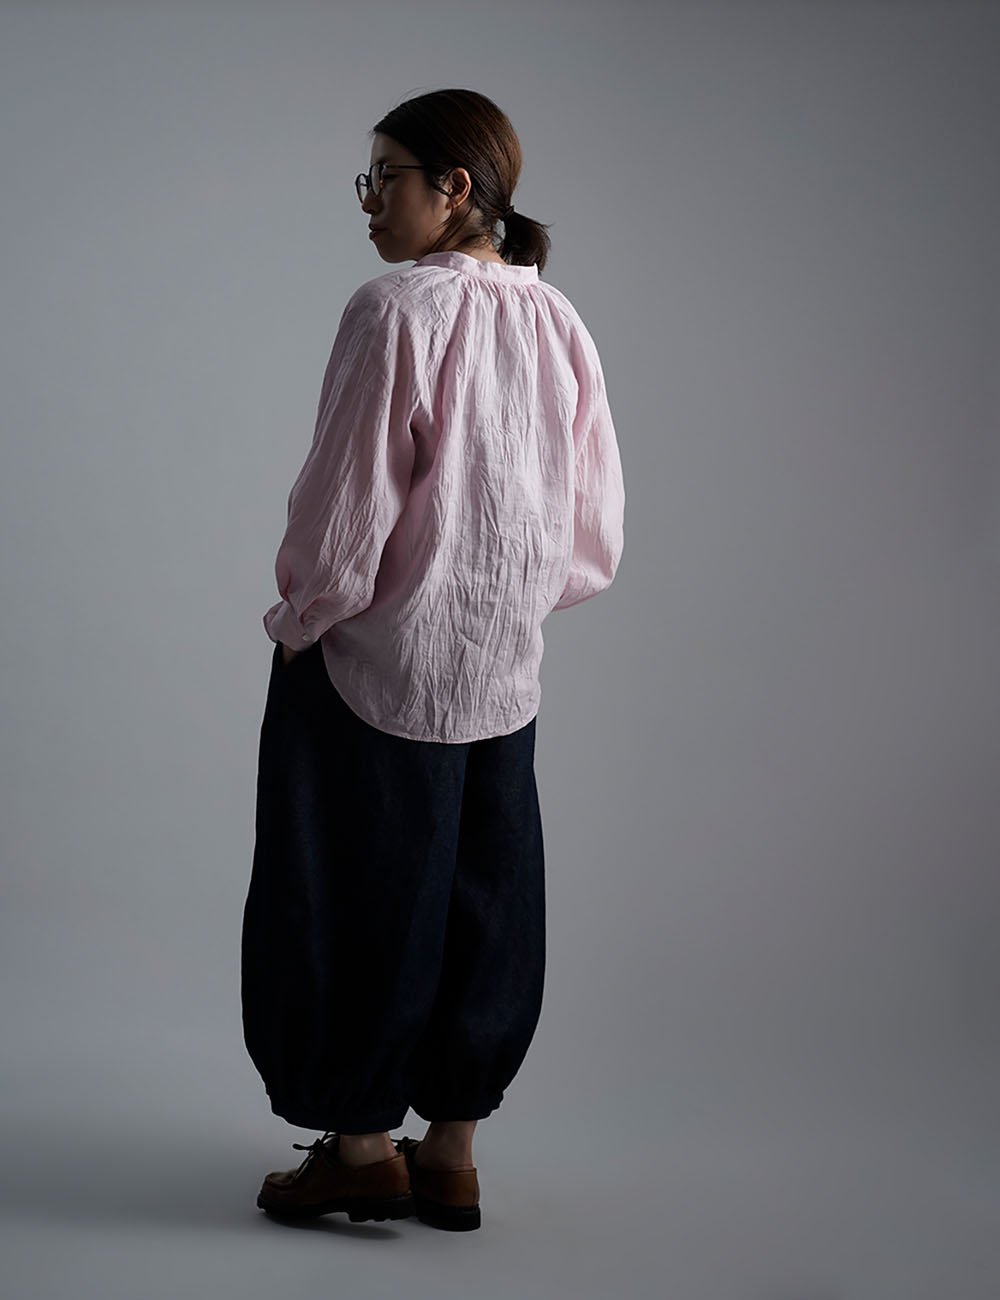 【wafu】 雅亜麻 linen shirt リネンシャツ 薄地 60番手 ハンドワッシャー 桜色(さくらいろ) t034a-sak1